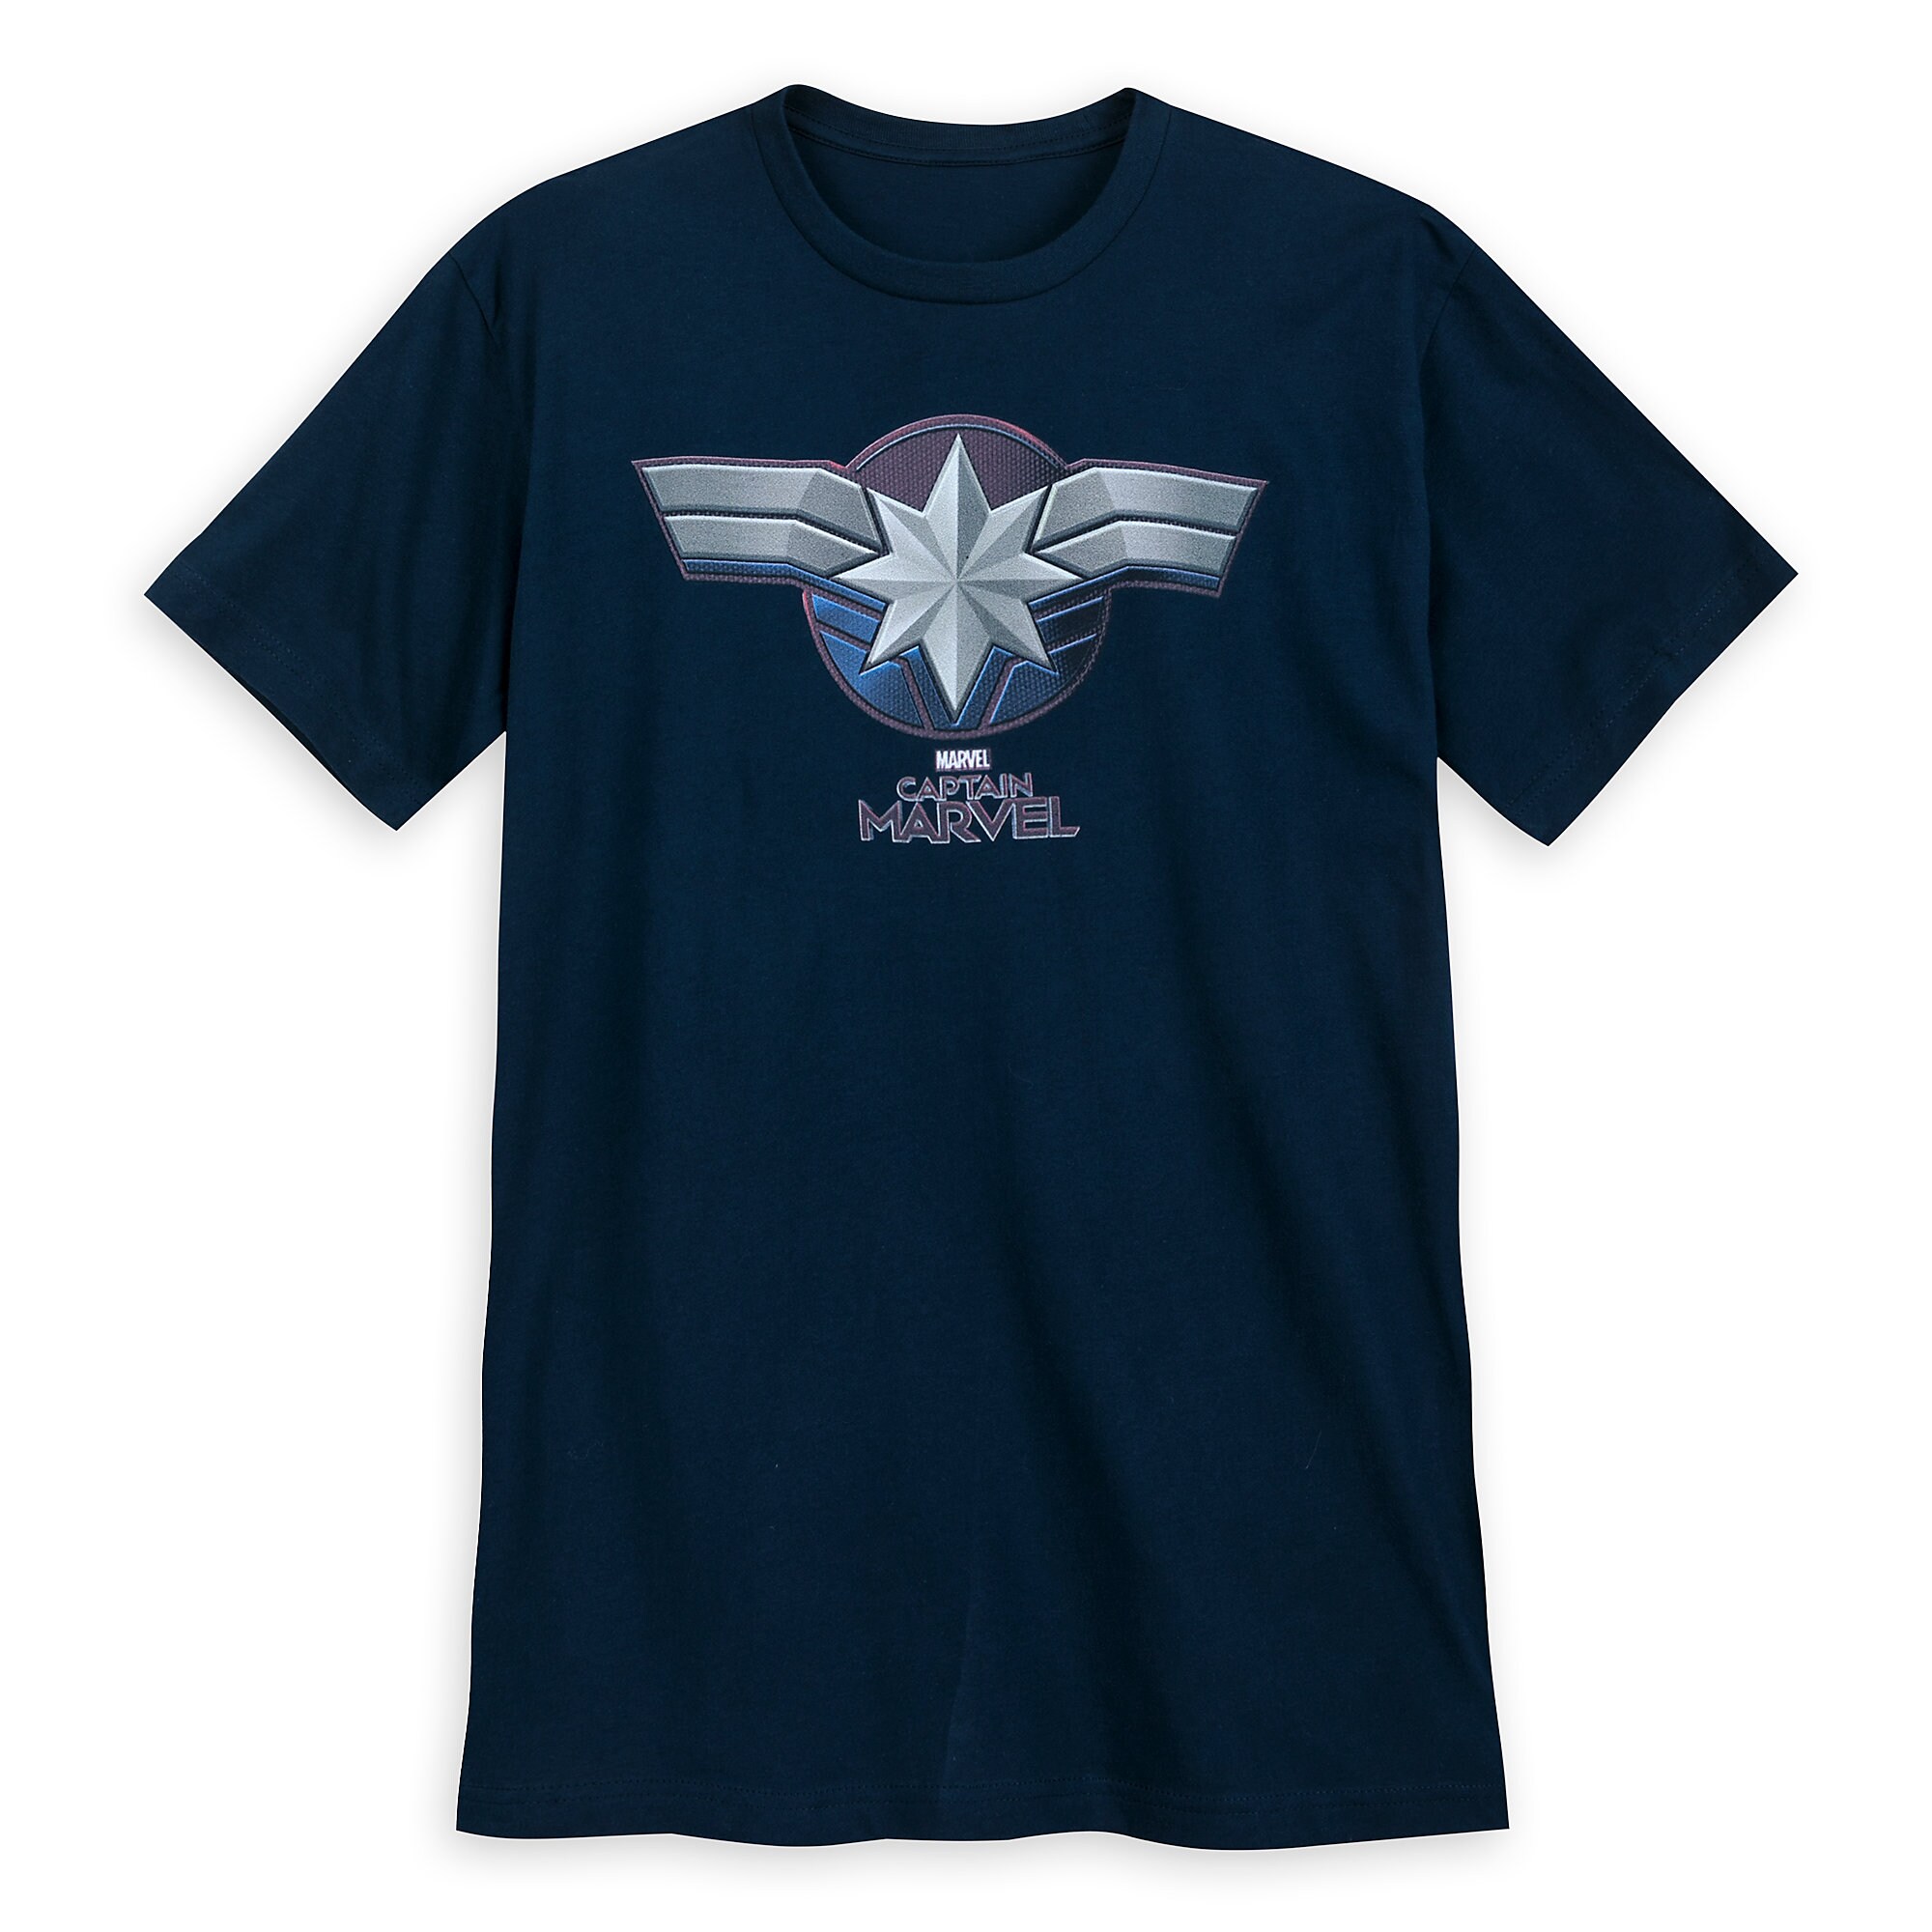 Marvel's Captain Marvel Emblem T-Shirt for Men